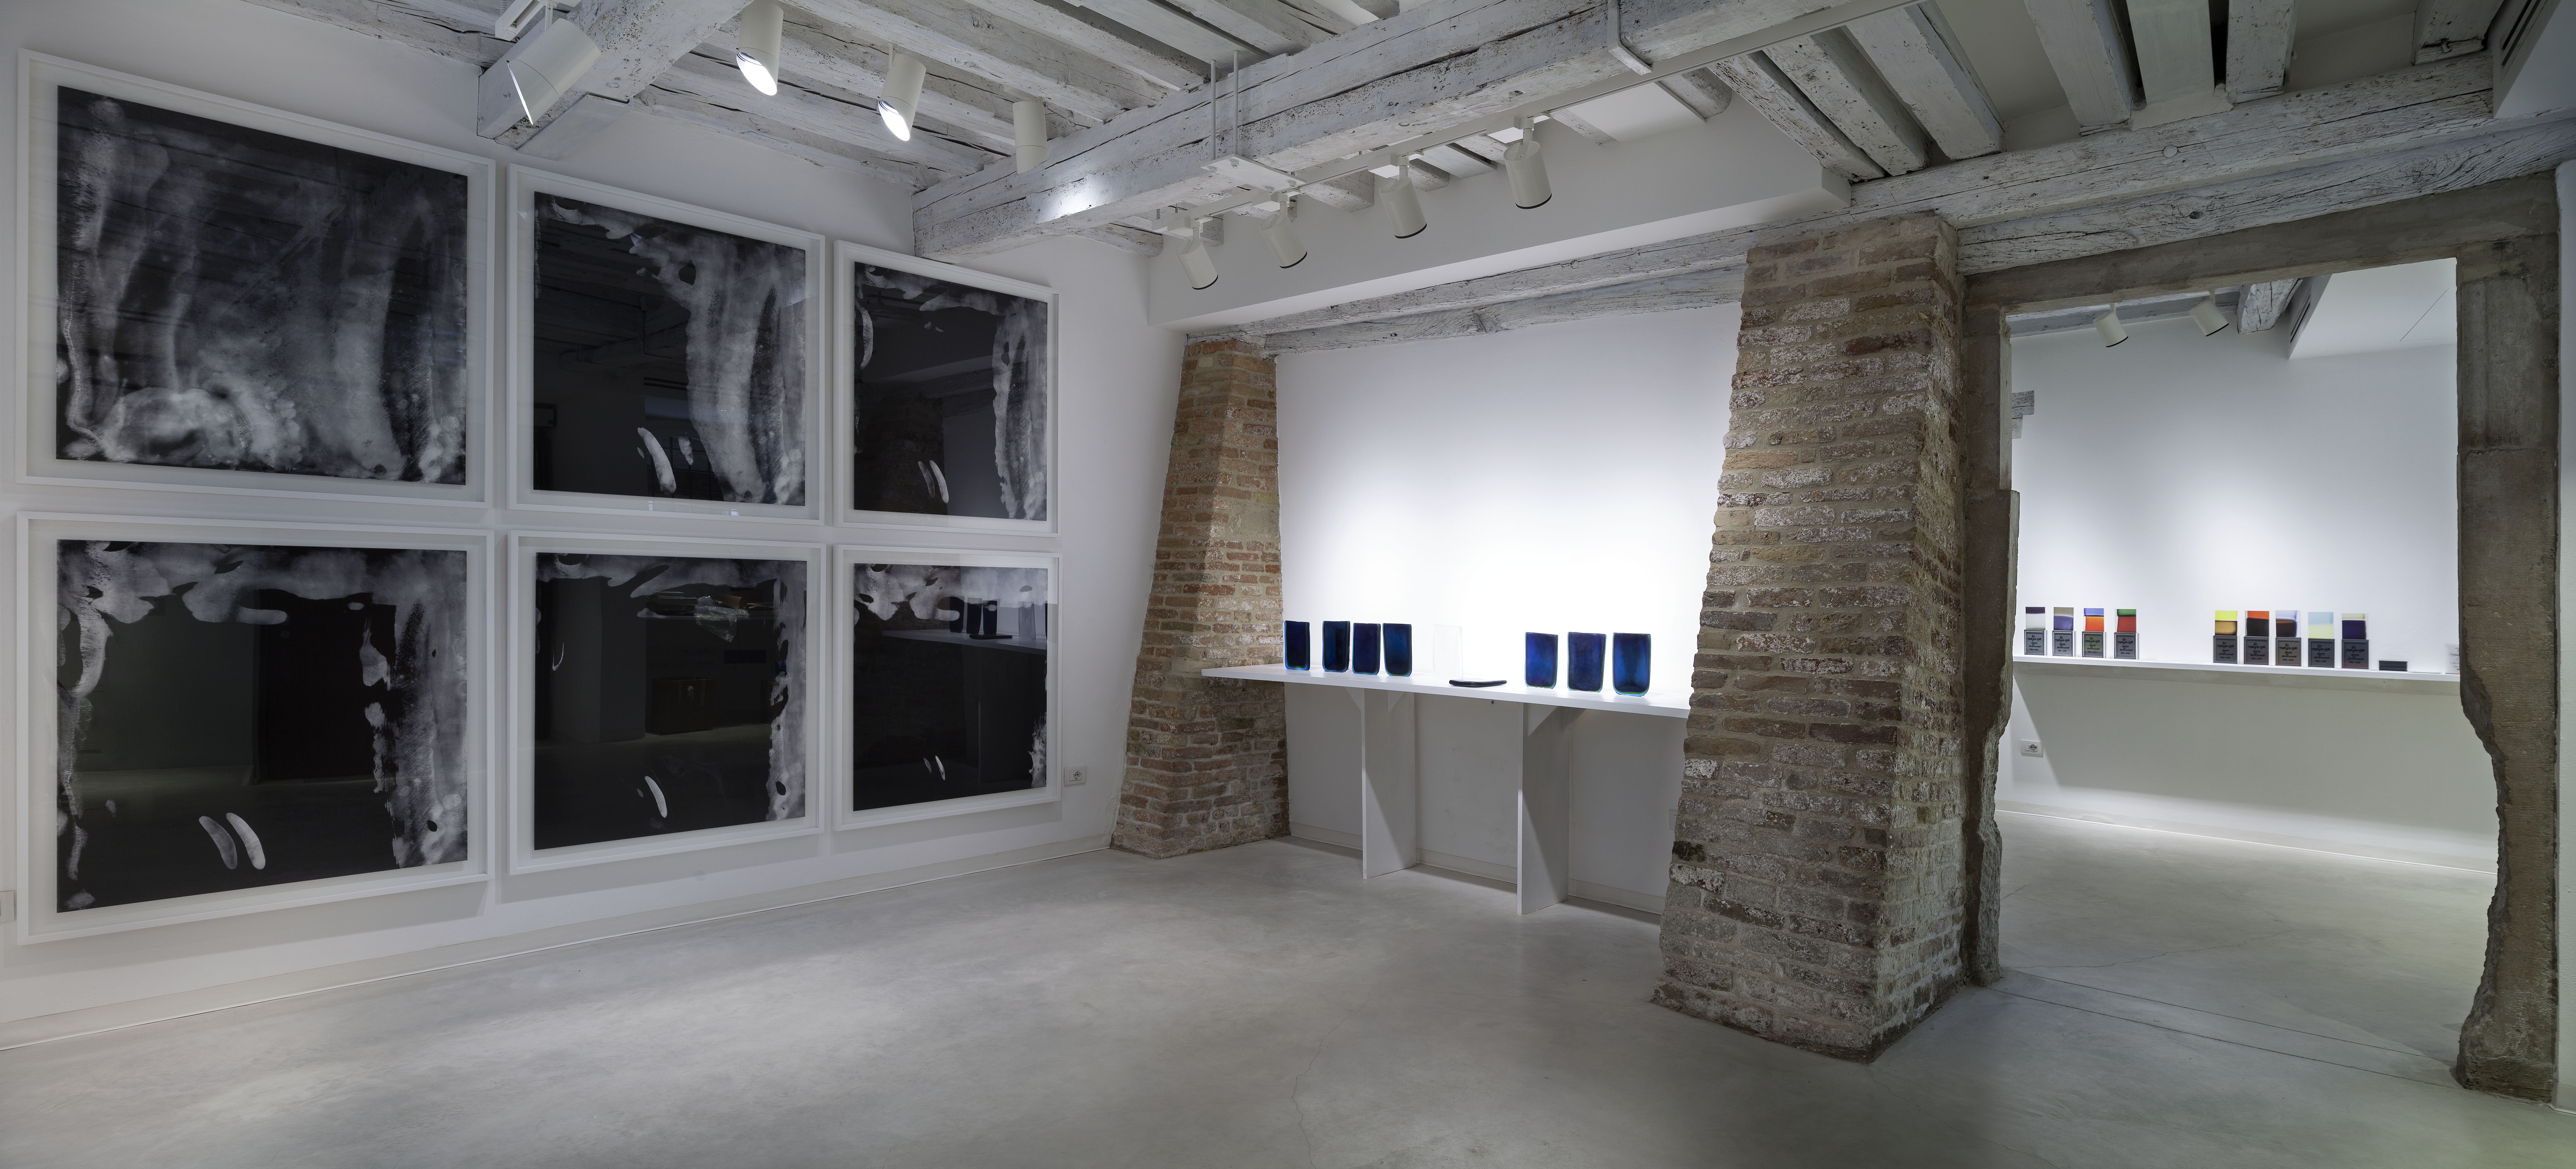 Installation view by Alessandro Diaz De Santillana, Hour-Glass, curated by Giorgio Mastinu, 7th April-21st June 2014, Marignana Arte, Venice